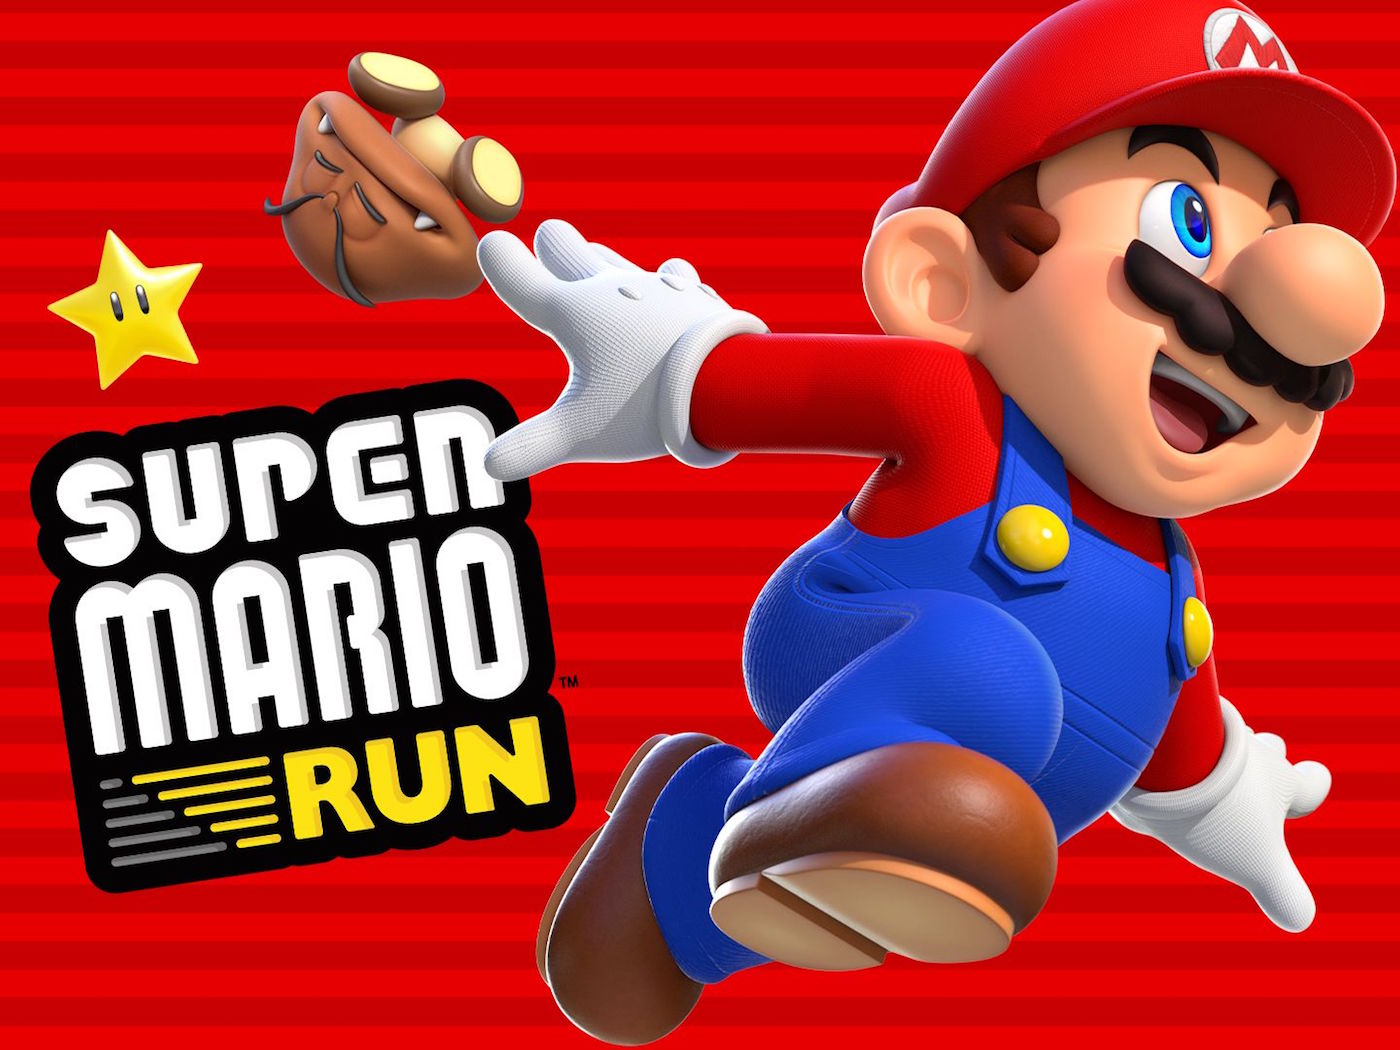 Super Mario Run: Release-Termin für iPhone am 15. Dezember